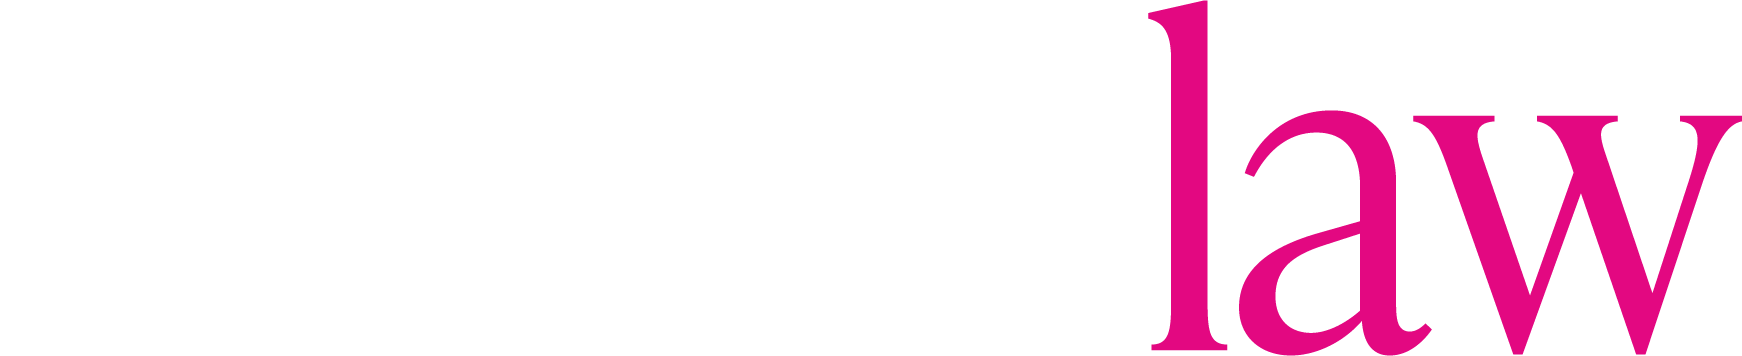 Atkinslaw Logo Magentareversed 1